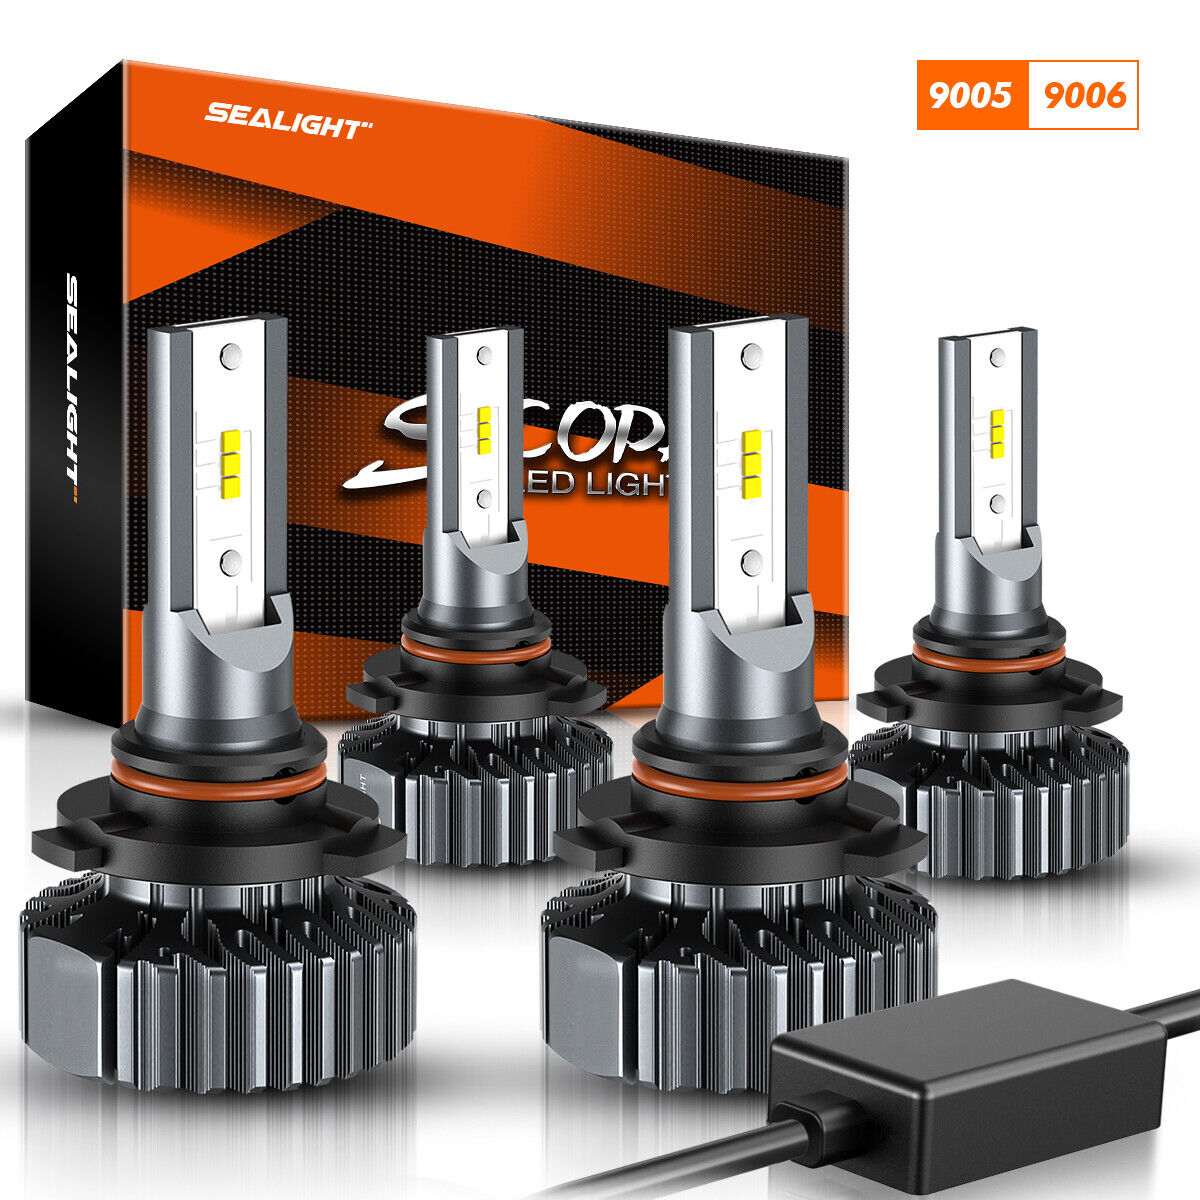 SEALIGHT 9005 9006 LED Headlight Kit Bulbs High Low Beam 6500K Bright High Power